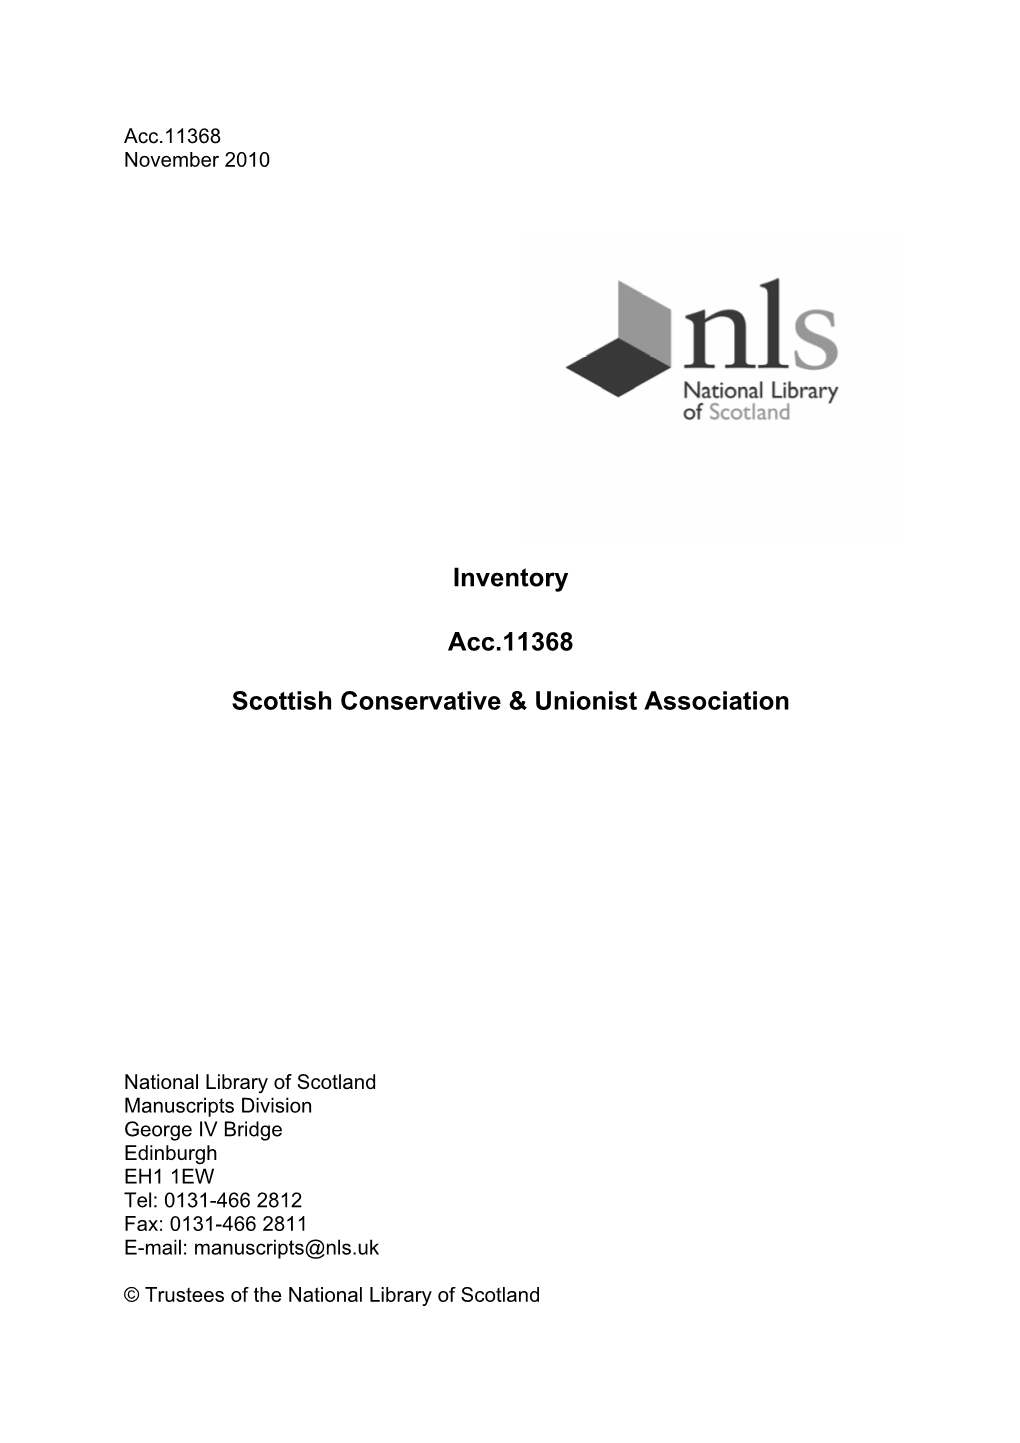 Inventory Acc.11368 Scottish Conservative & Unionist Association